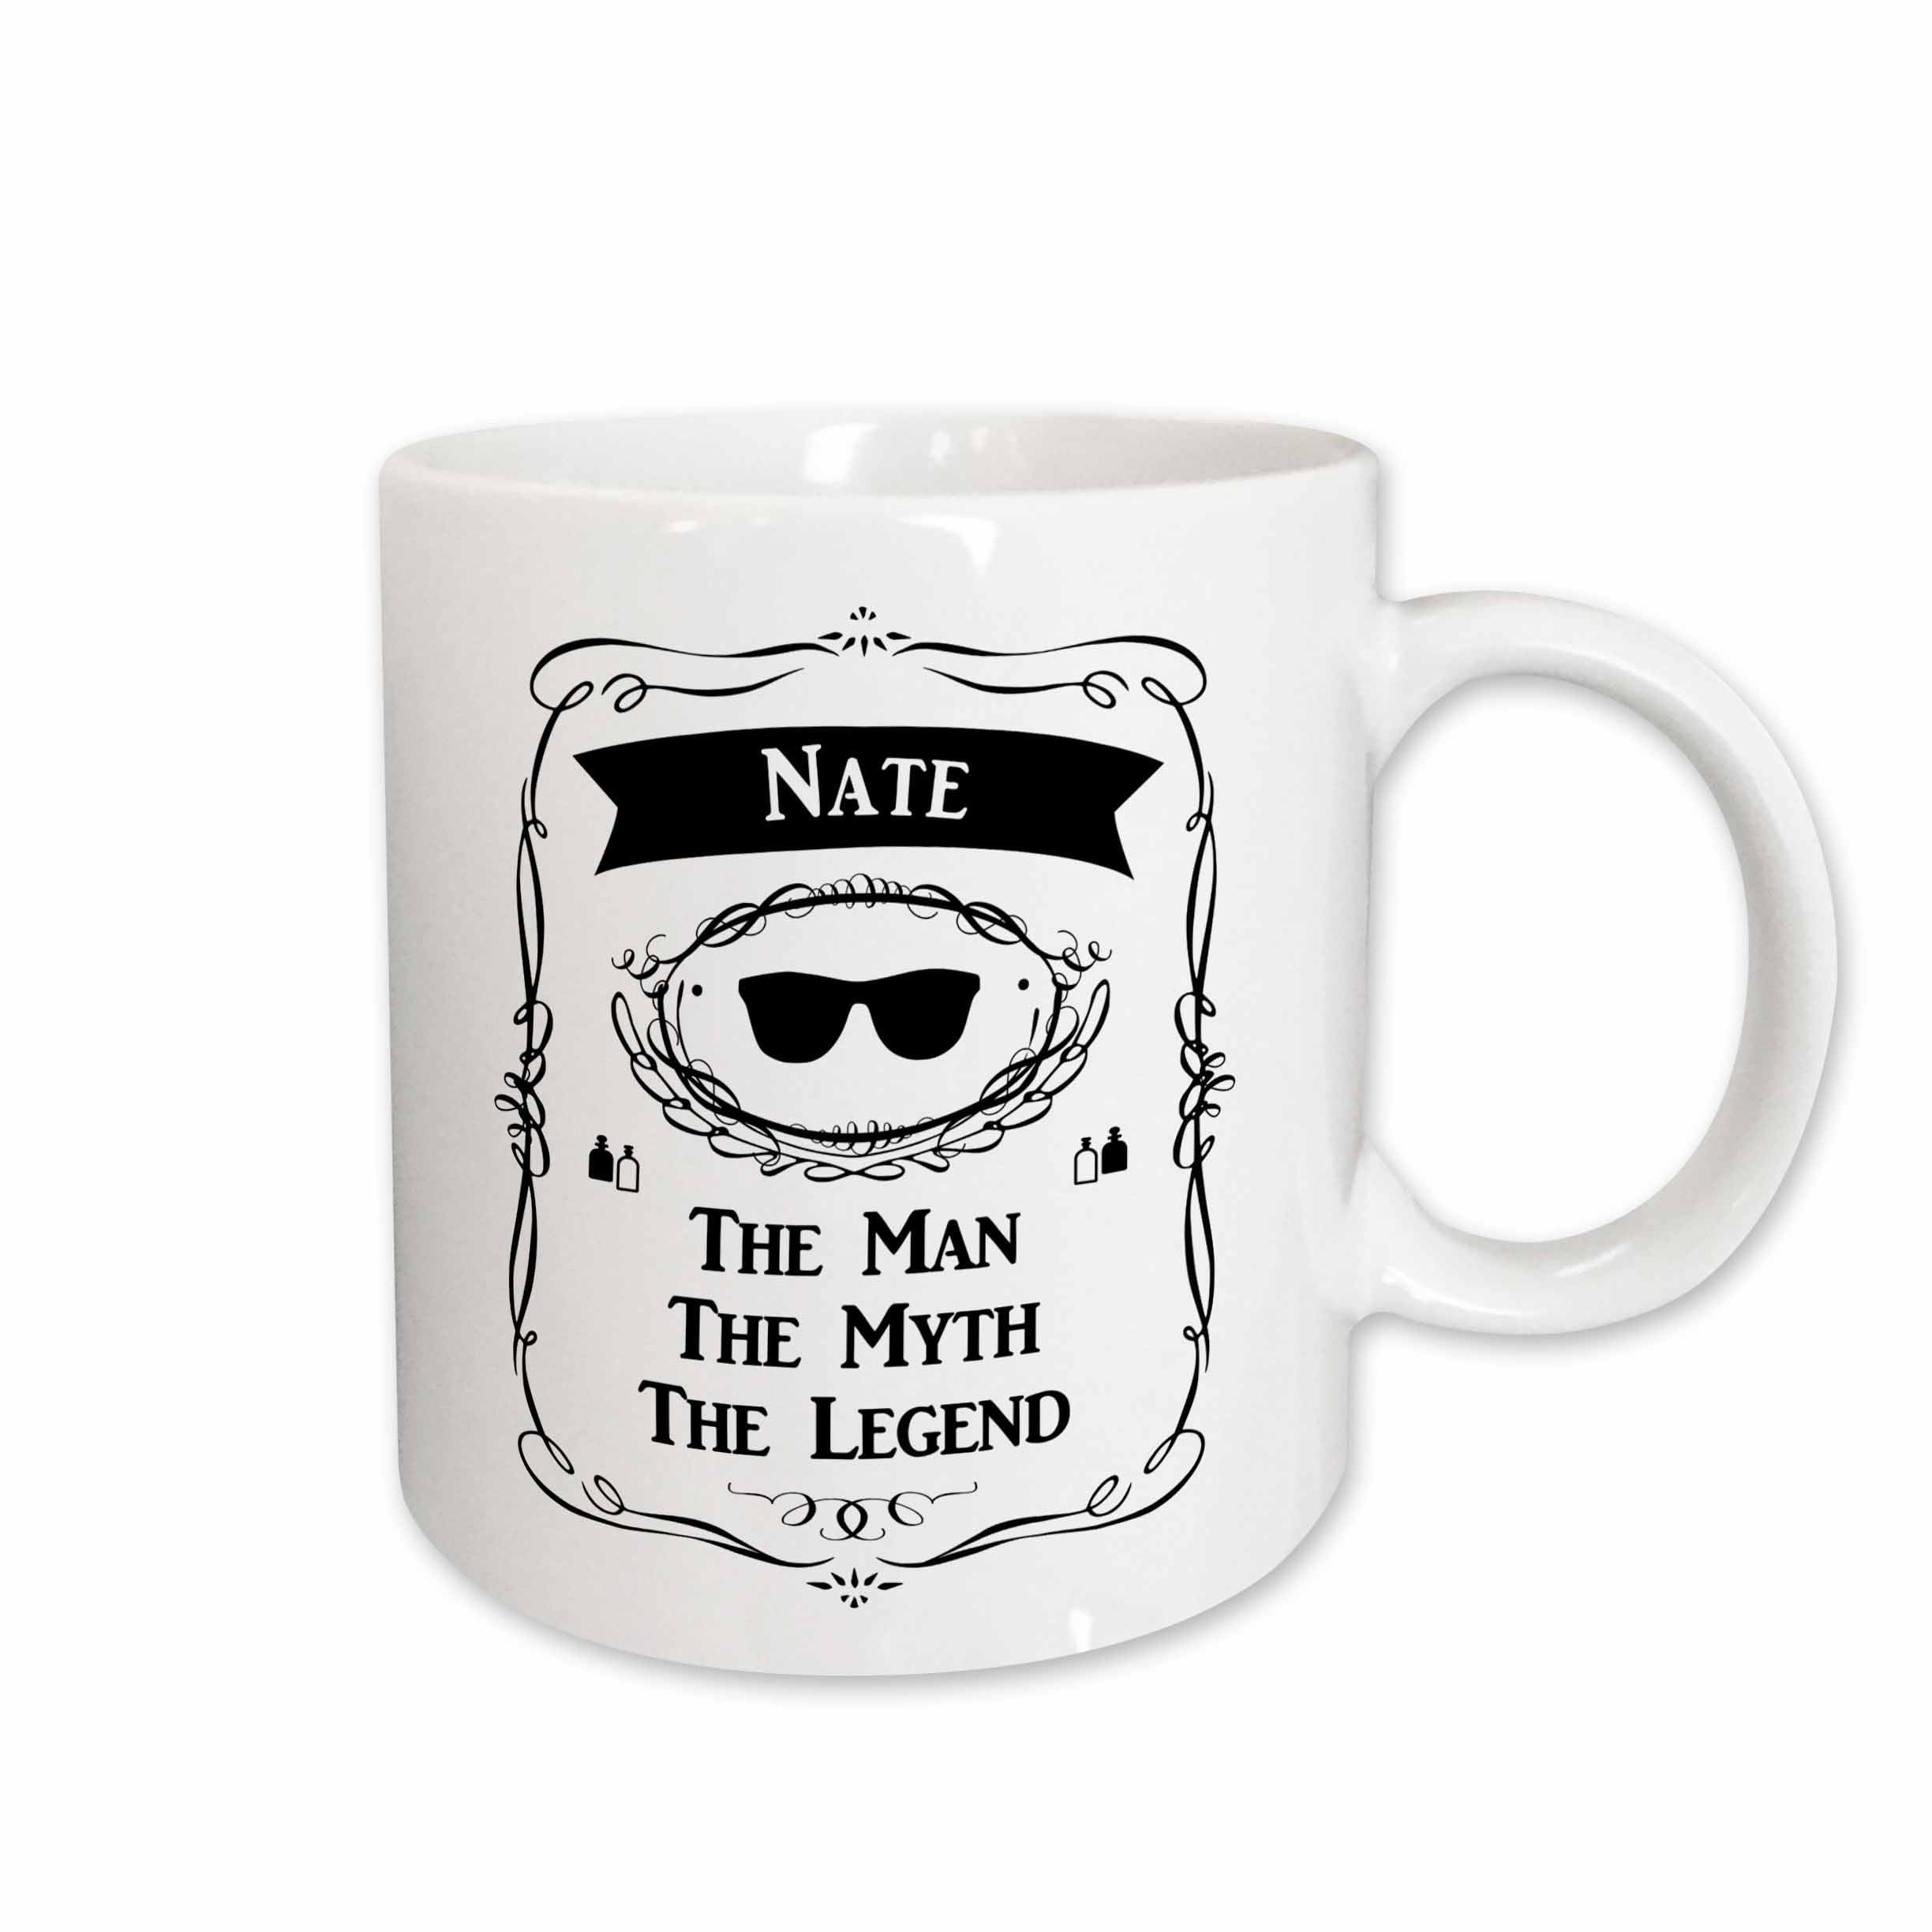 1/2 Pint Mug The Man,The Myth,The Legend Brand New. 